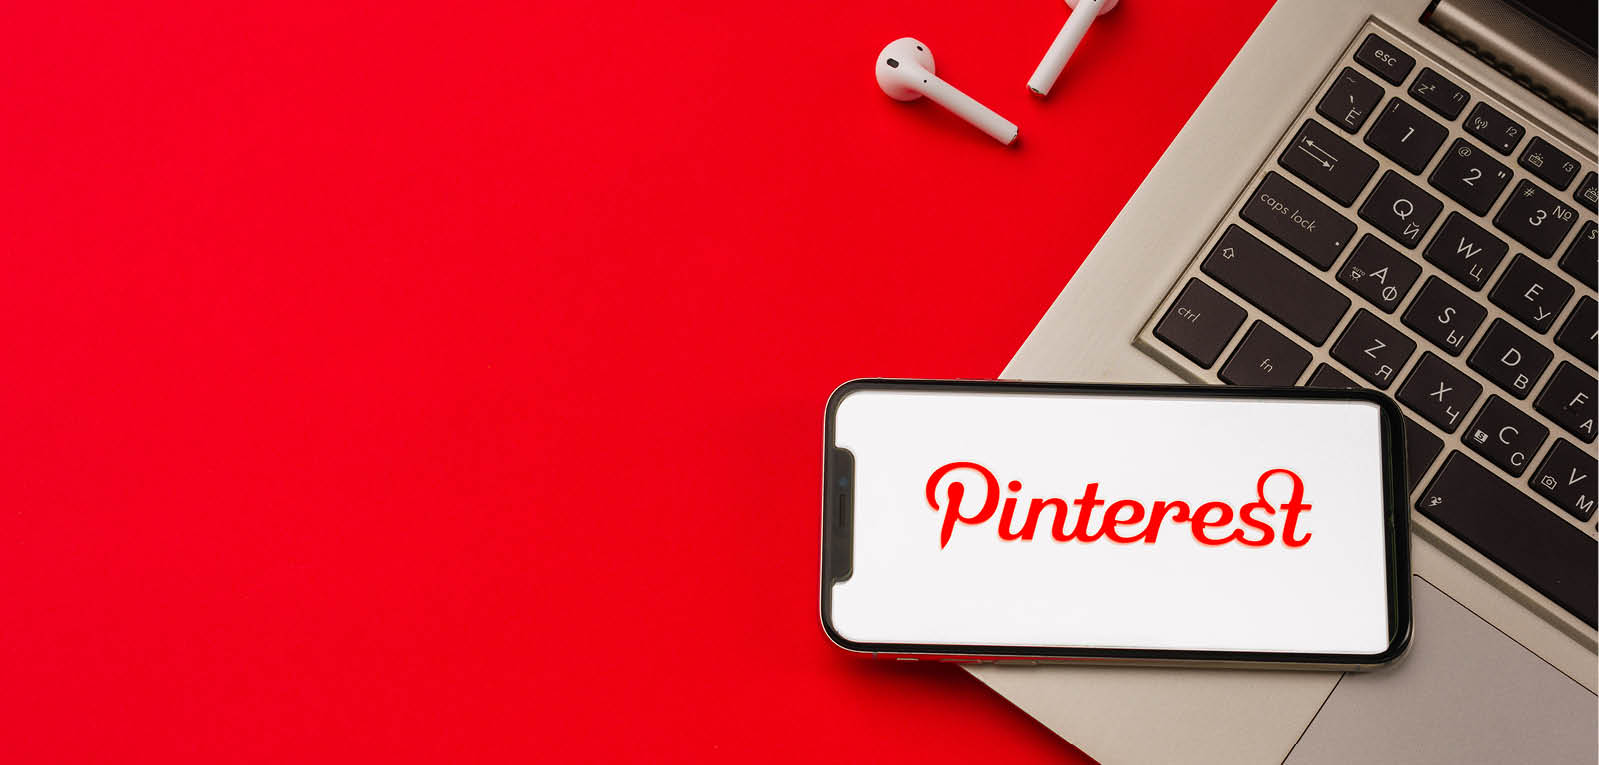 Pinterest app open on phone